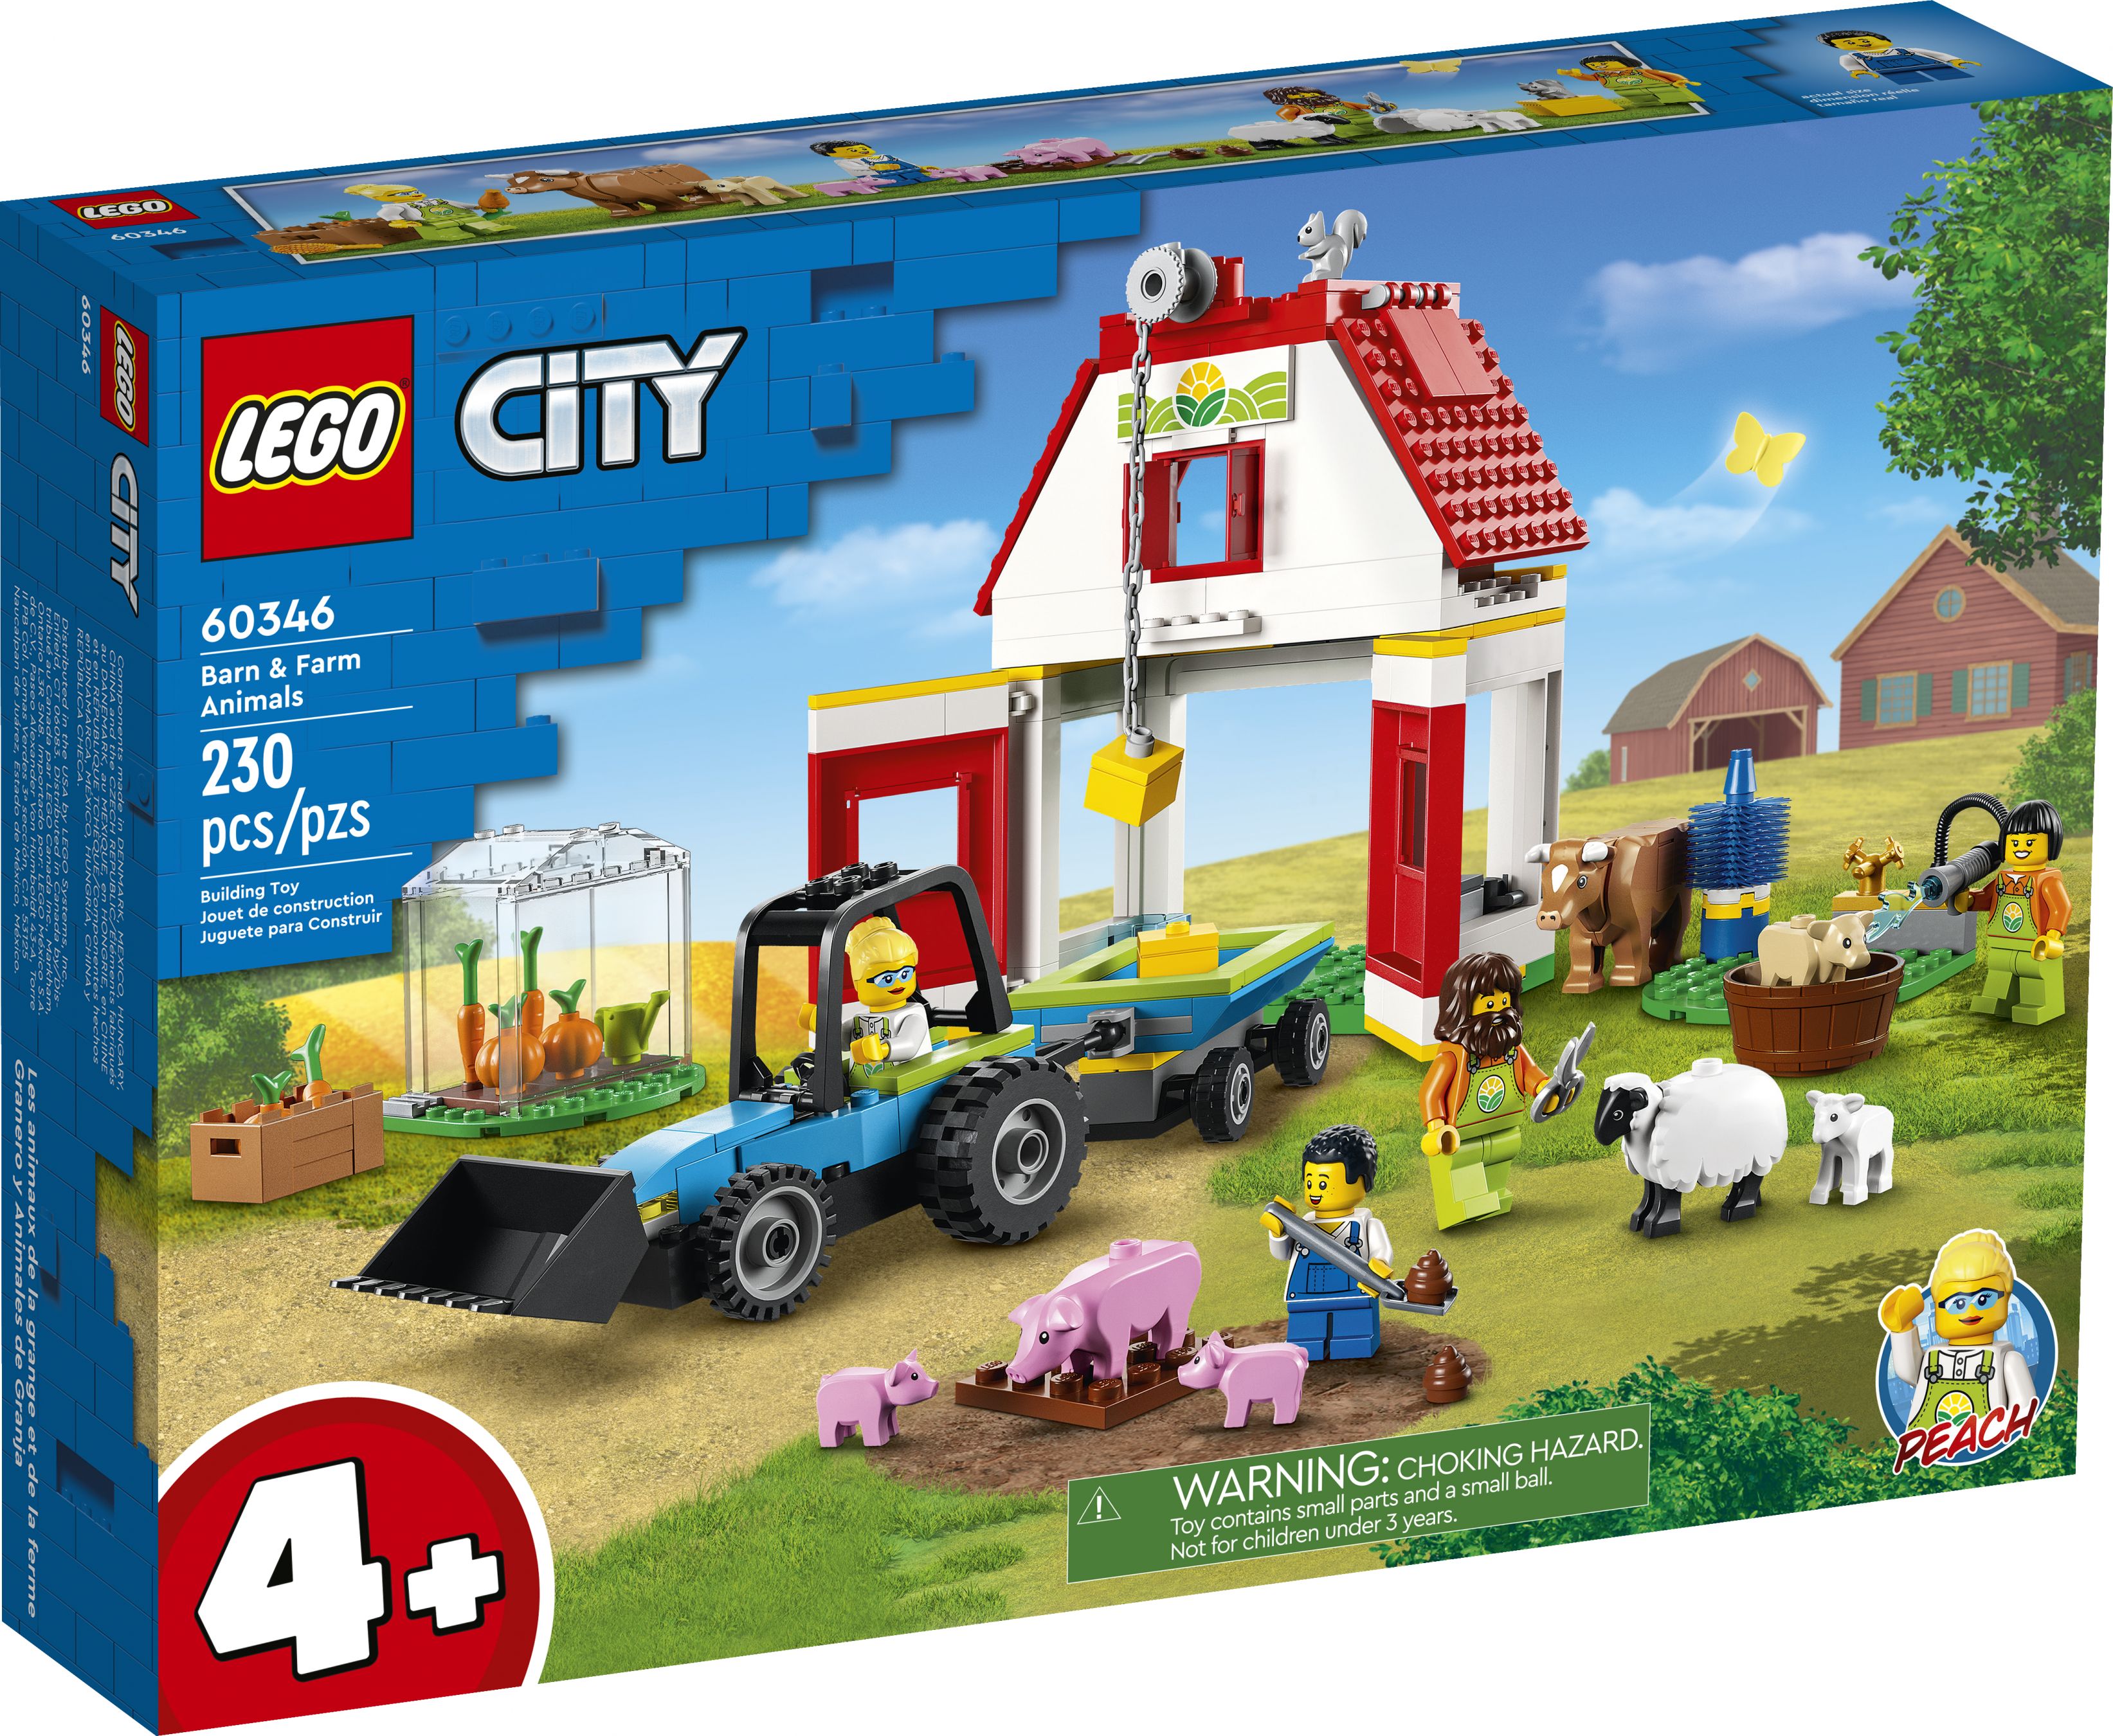 LEGO City 60346 Bauernhof mit Tieren LEGO_60346_Box1_V39.jpg